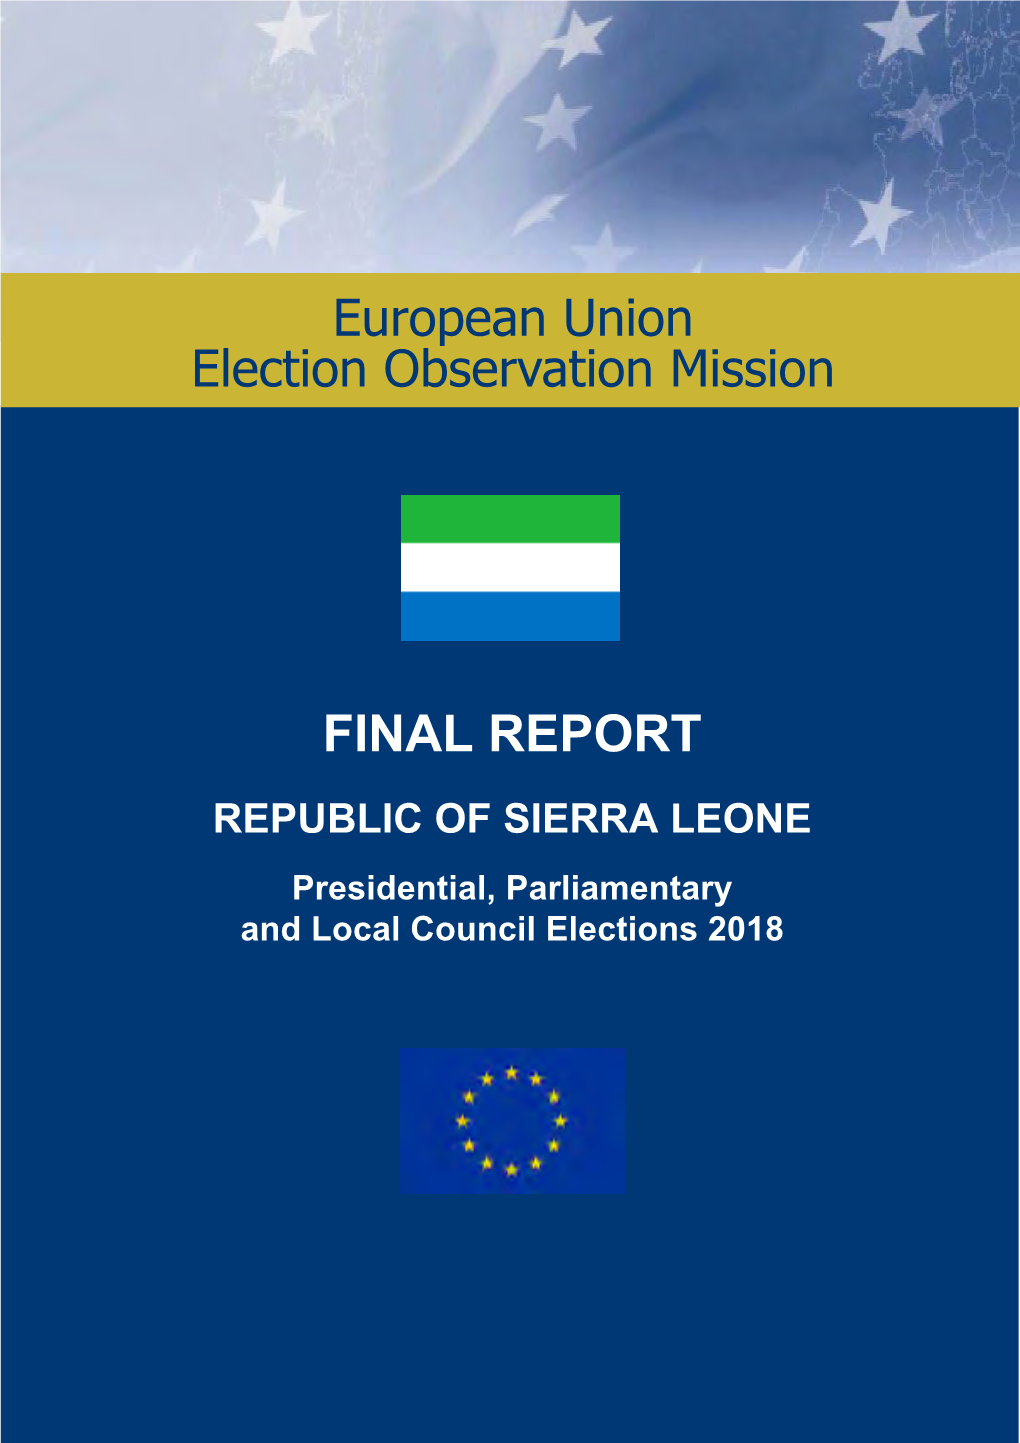 EU EOM Report on Sierra Leone Presidential, Parliamentary And